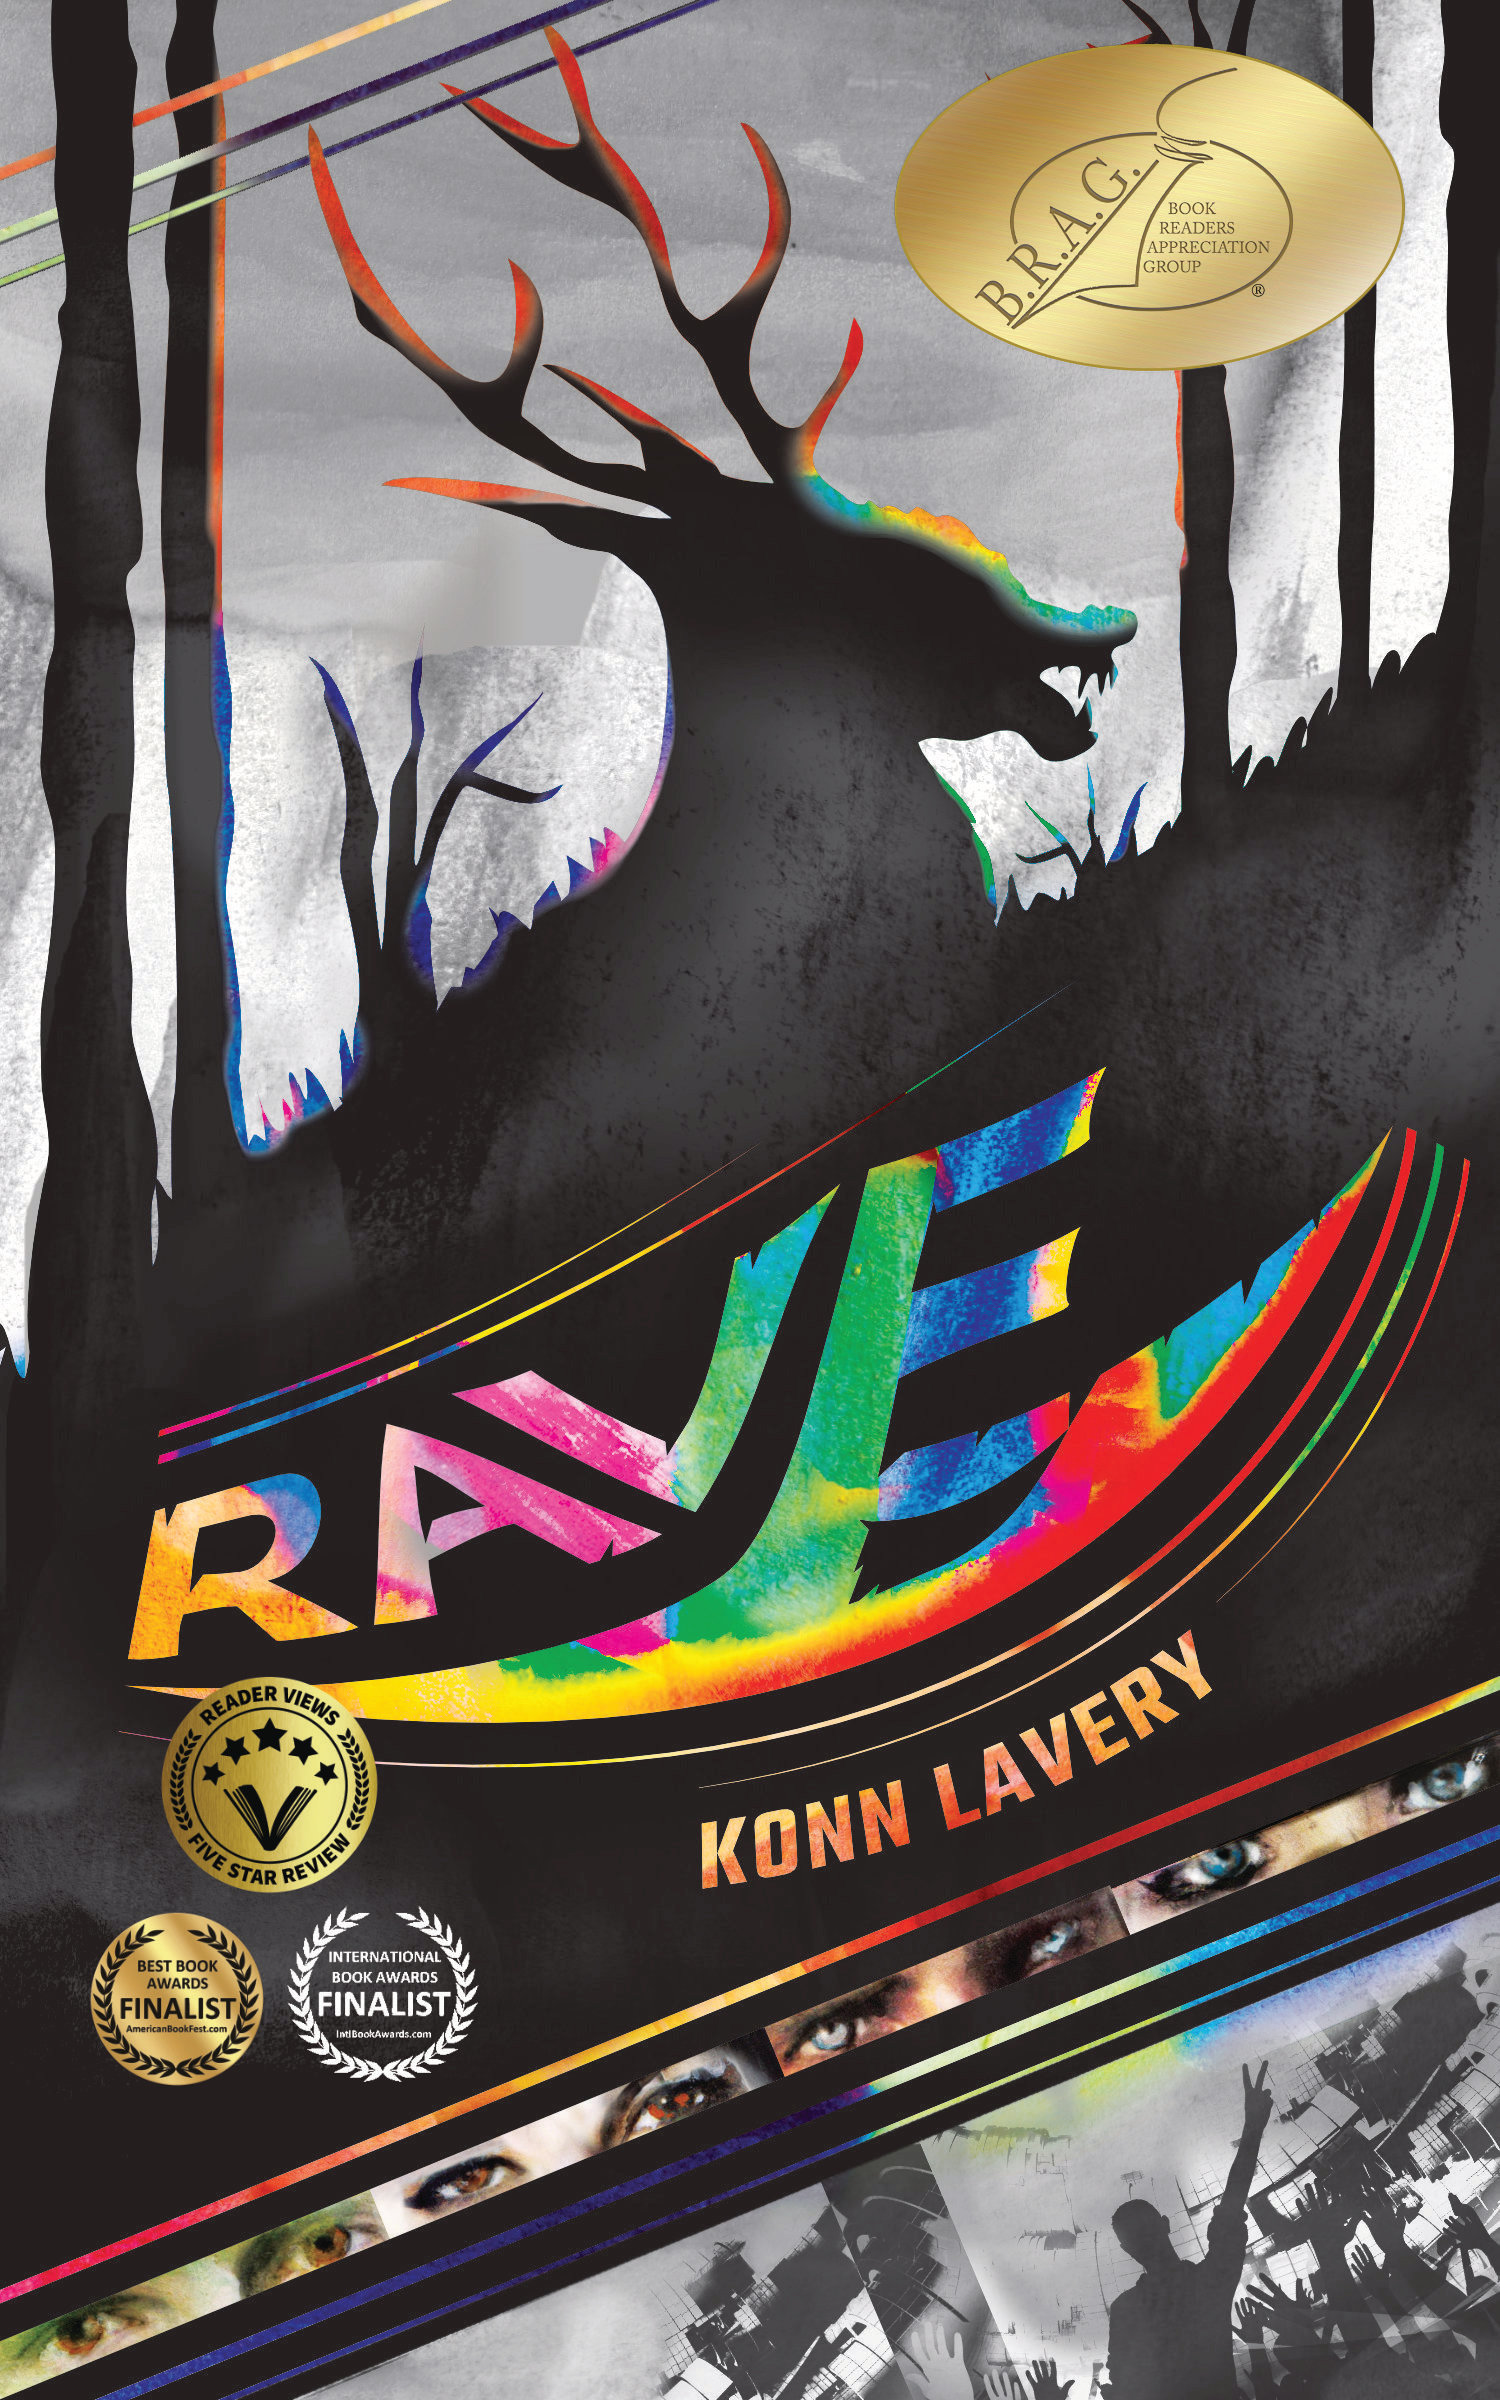 Rave: Canadian Horror Novel by Konn Lavery